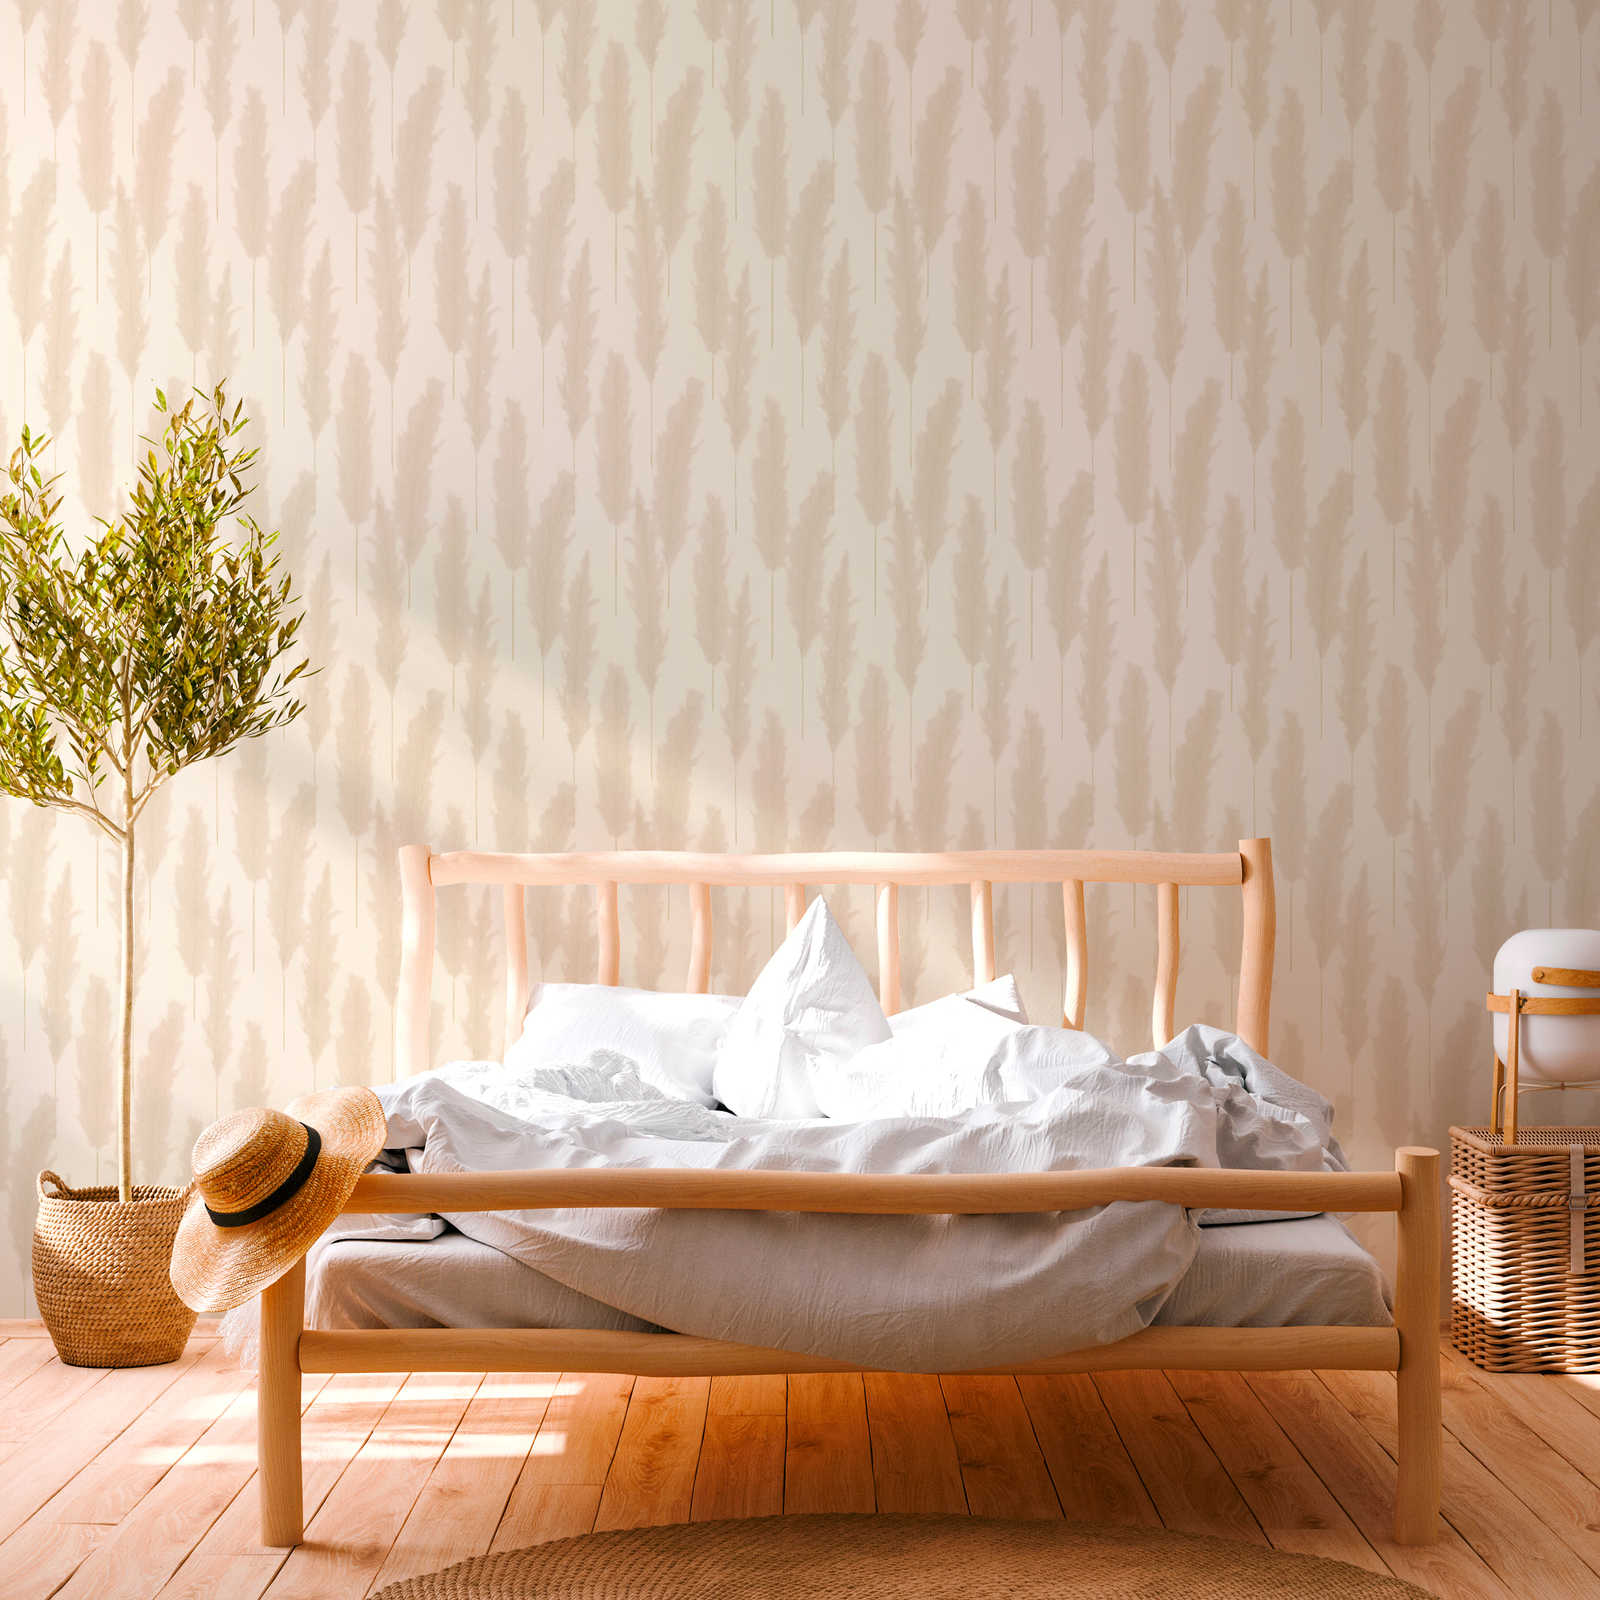             Wallpaper with lampbush grass design - beige, cream
        